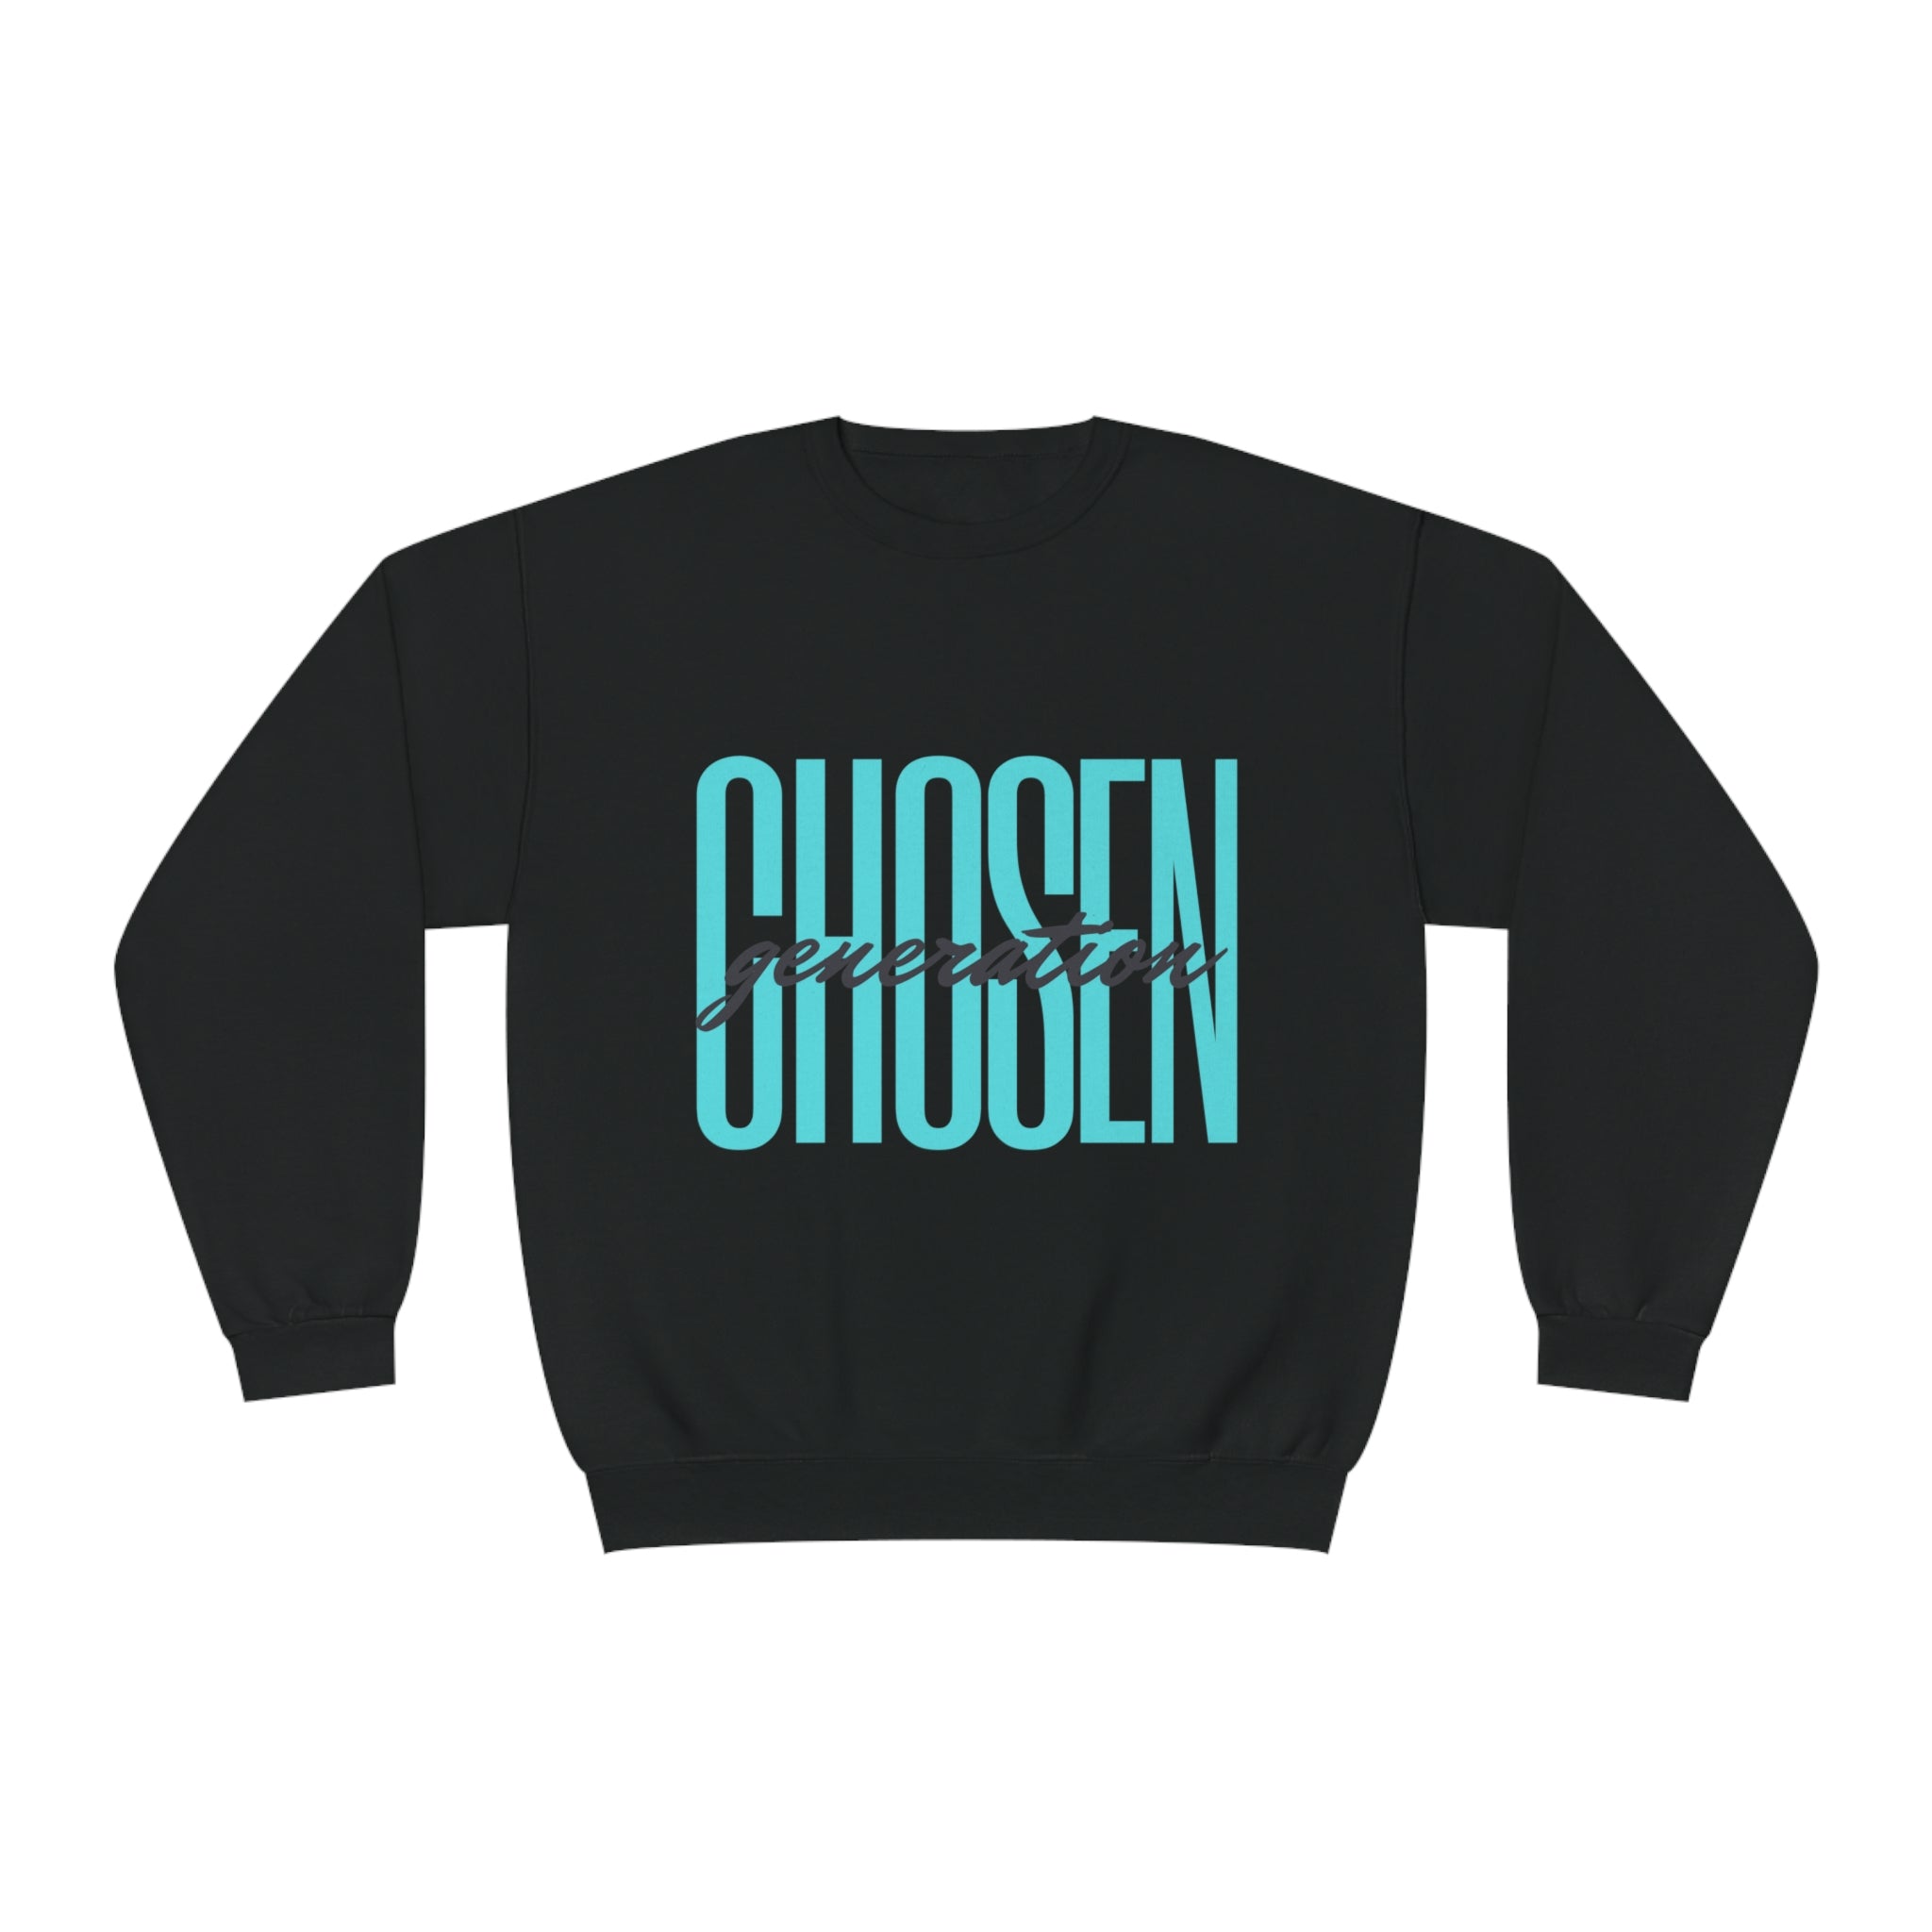 1 Peter 2:9 Crewneck Sweatshirt, Big Chosen Generation